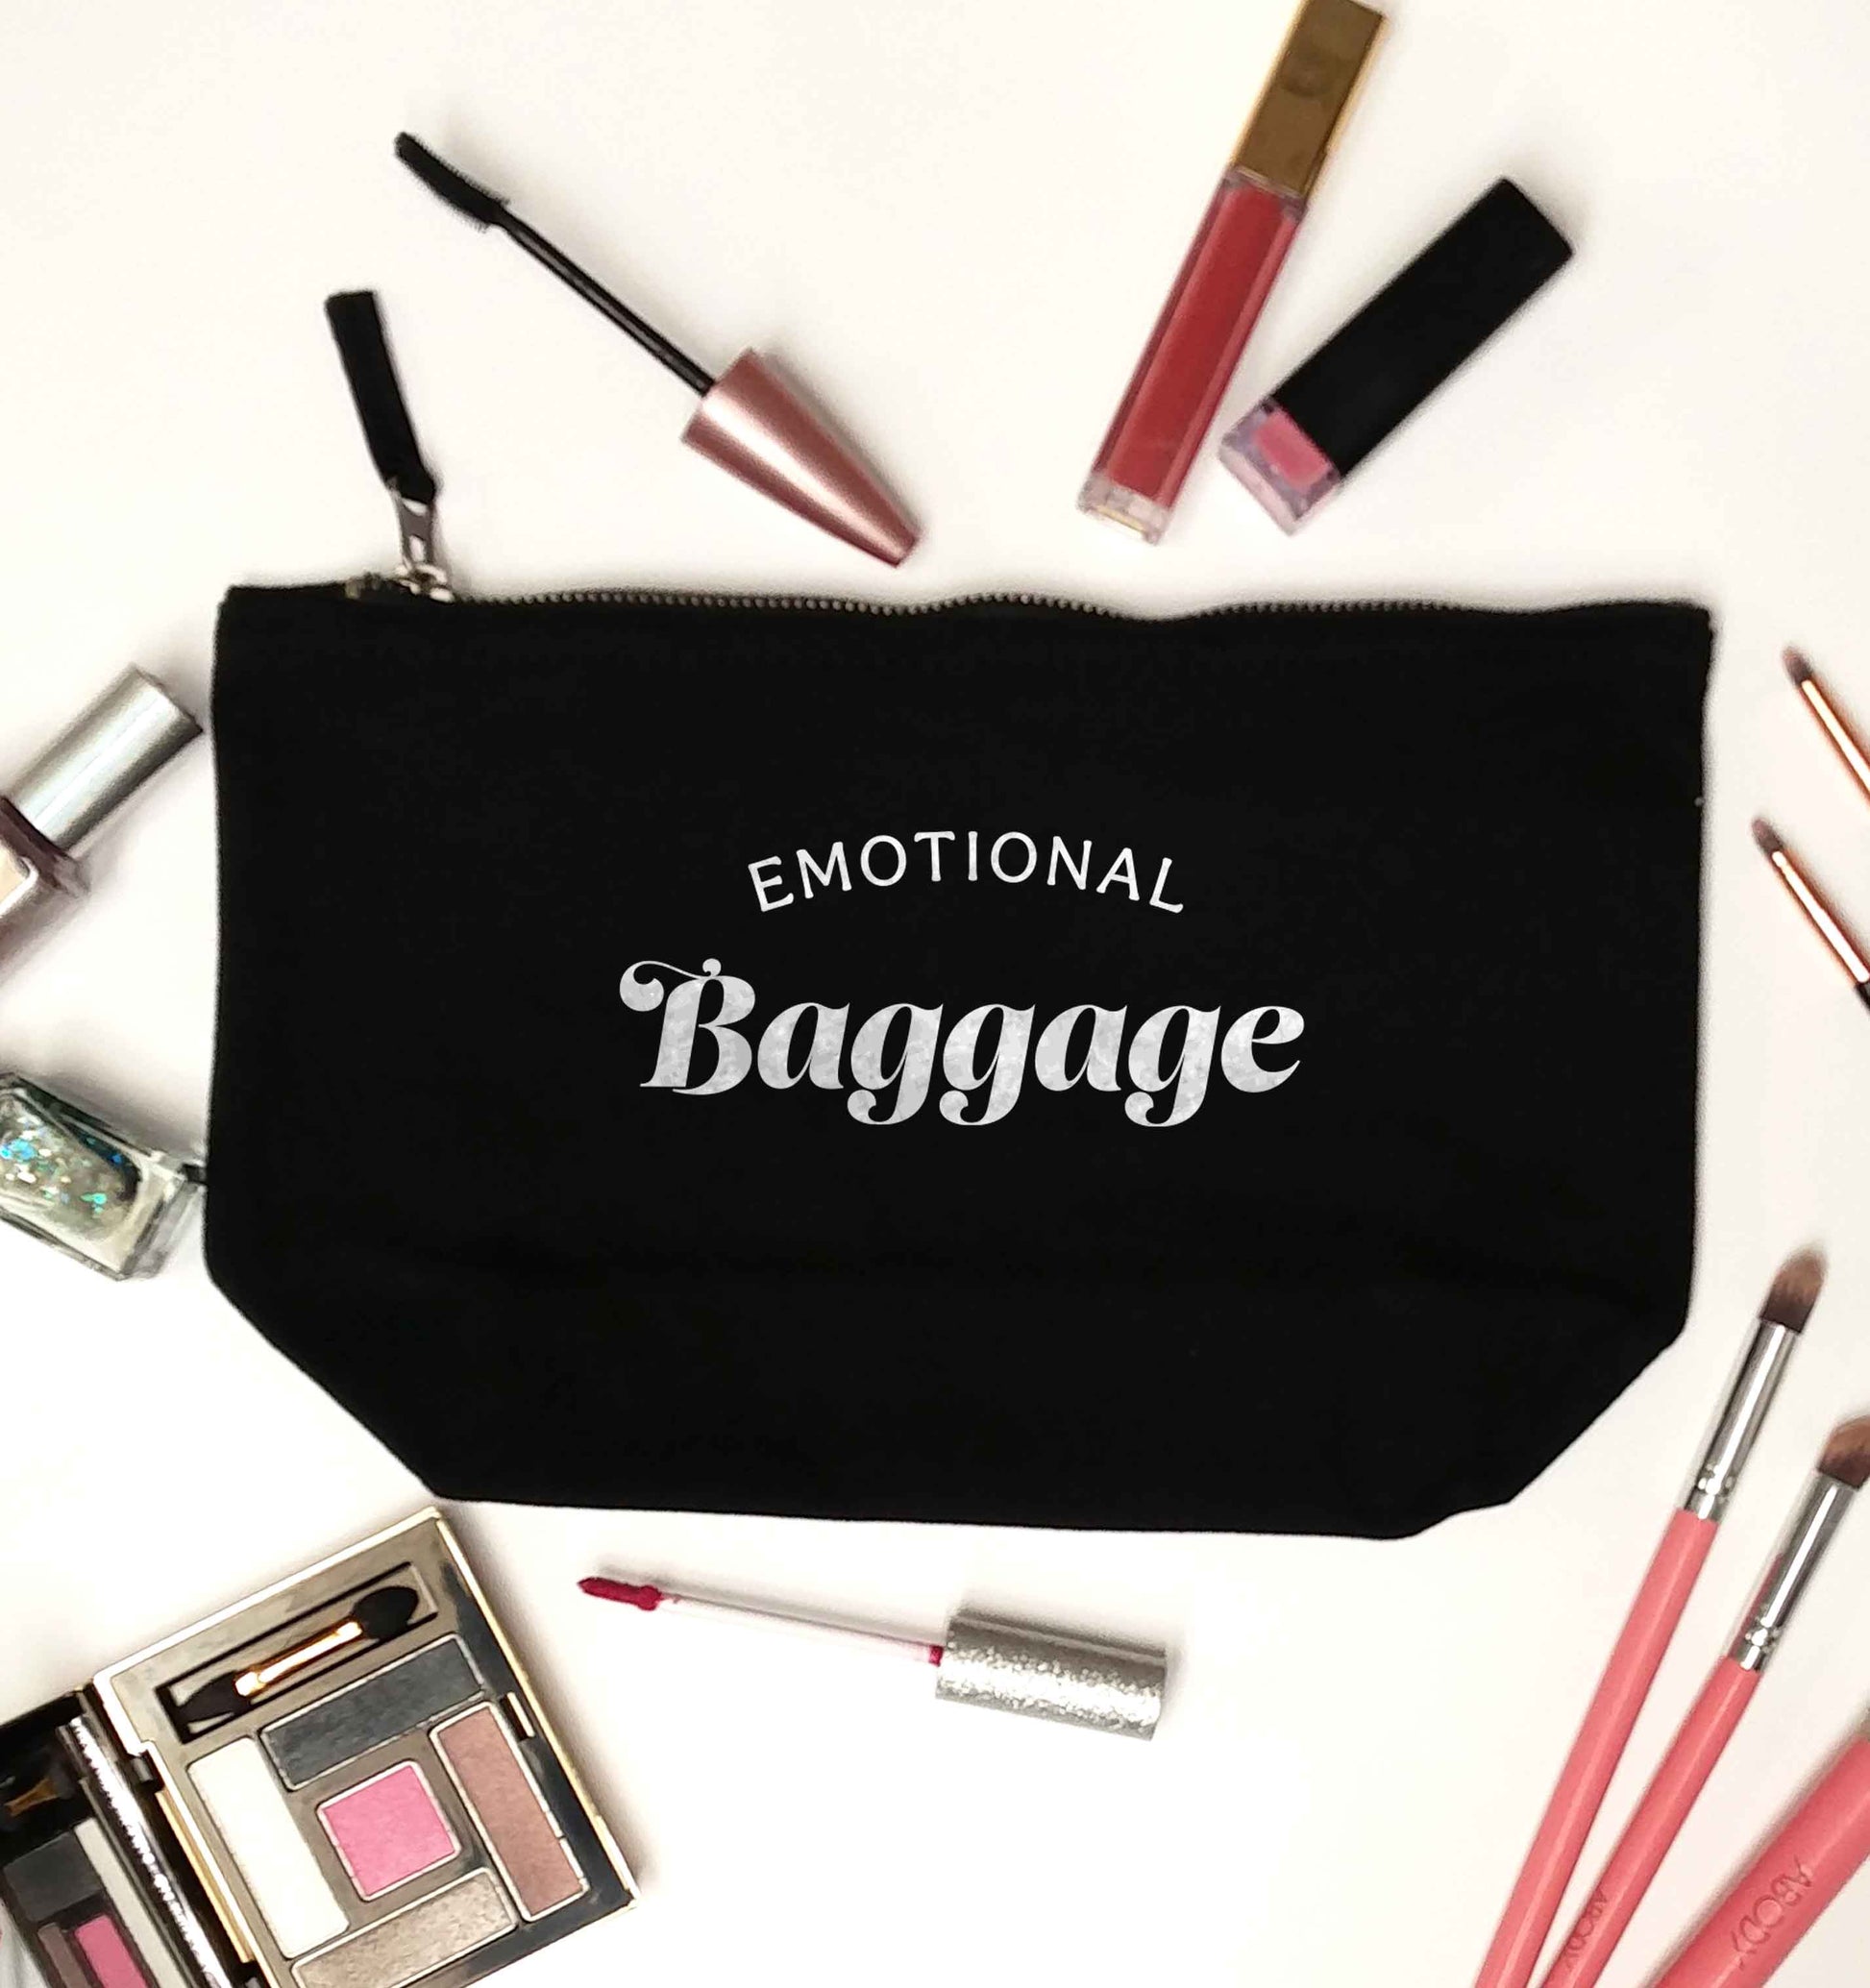 Emotional baggage black makeup bag